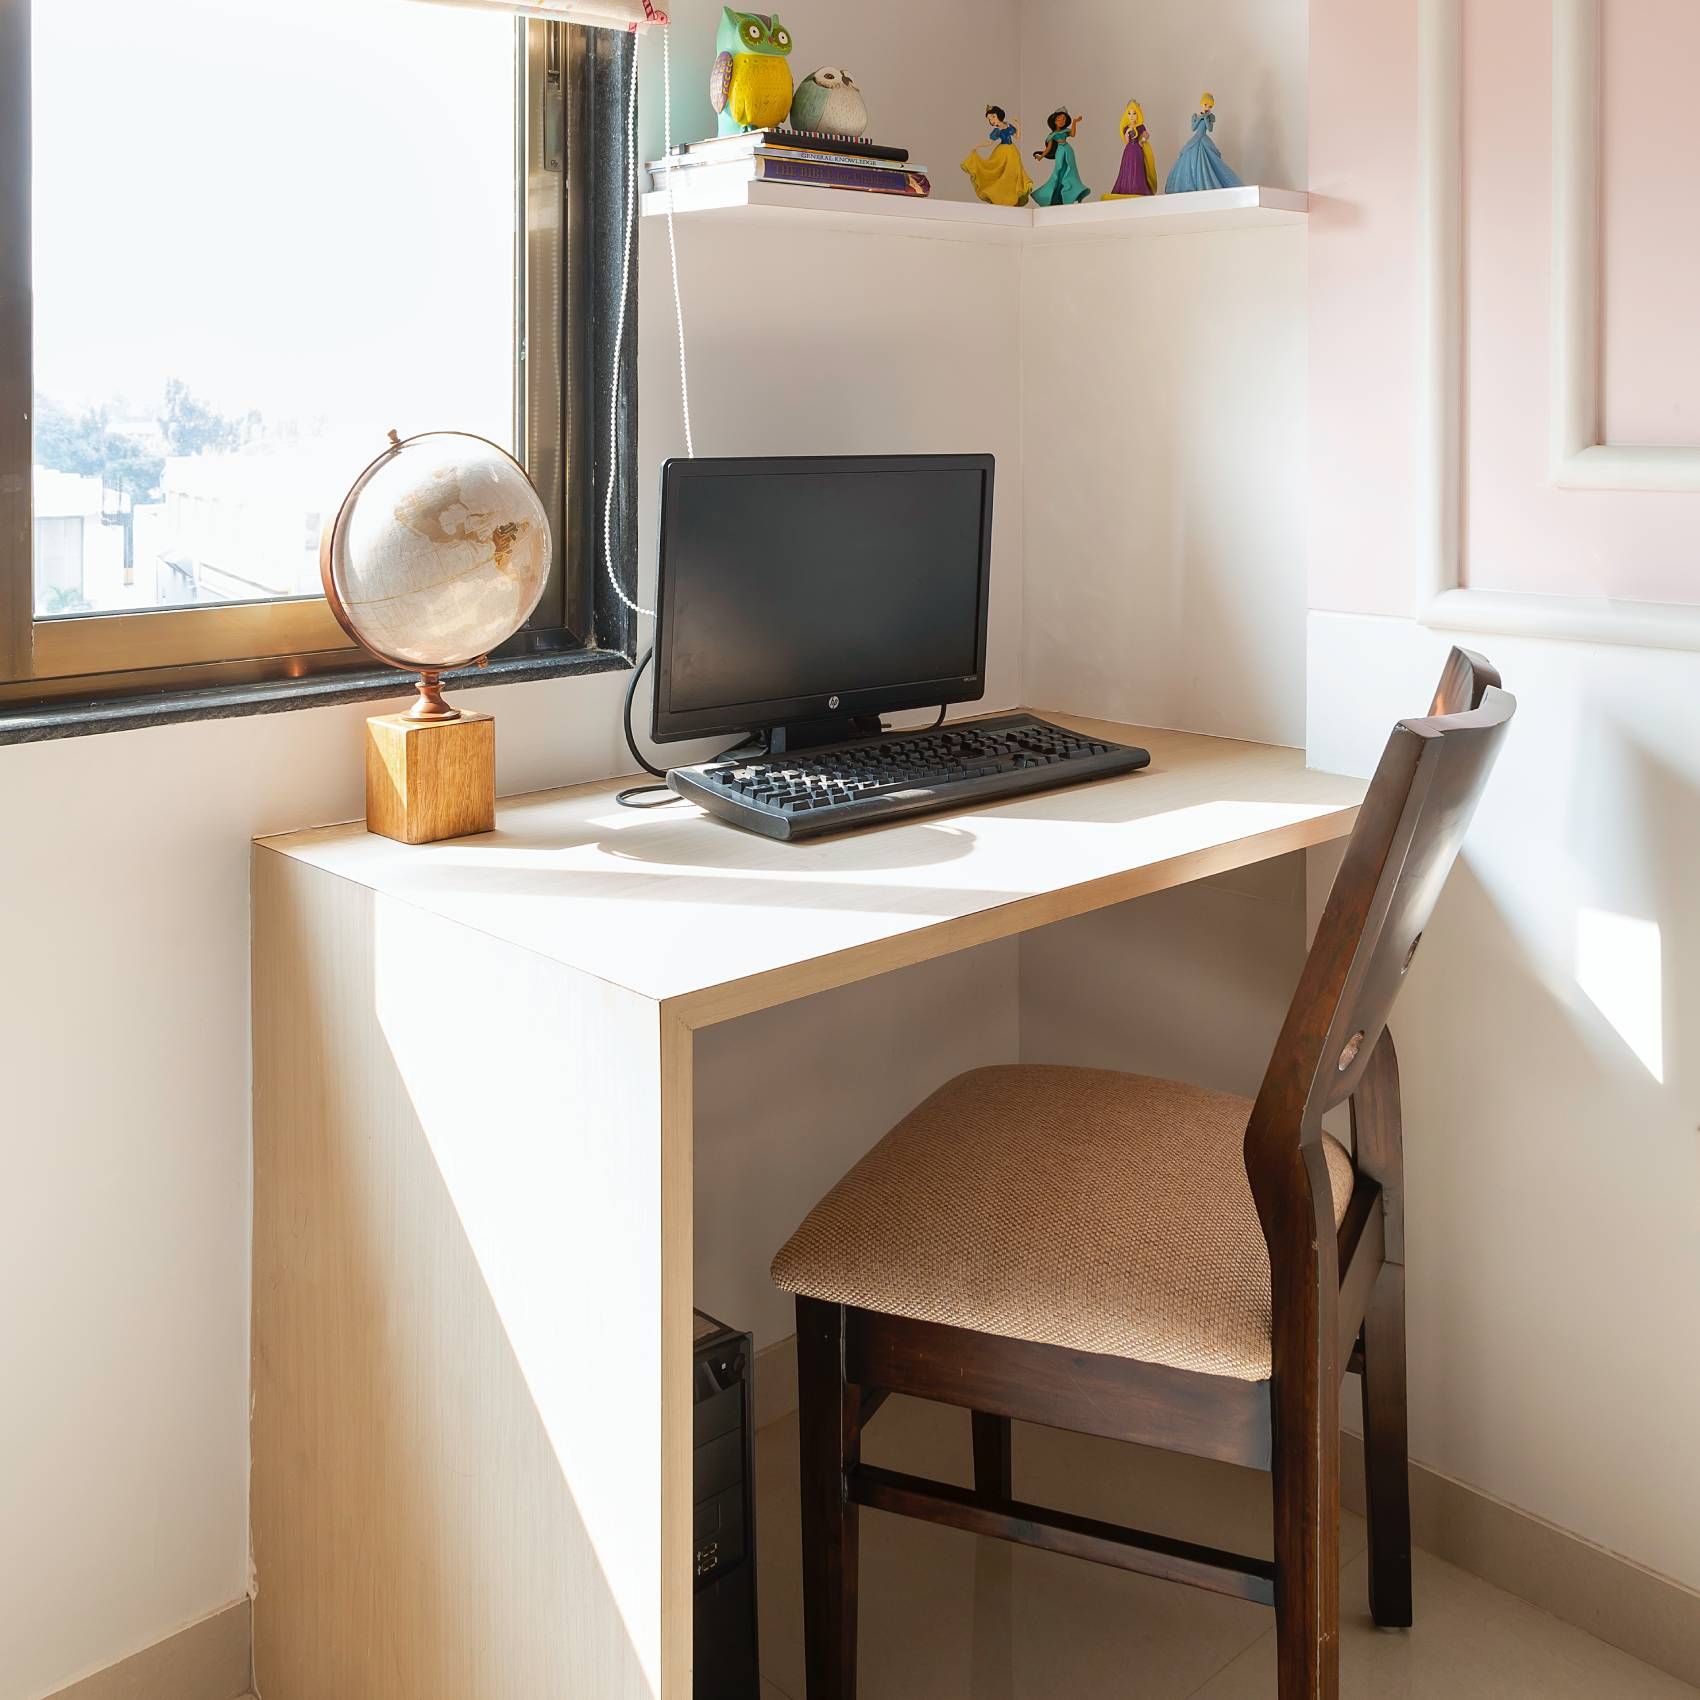 Modern Study Room Design With With Sleek Wall Shelves